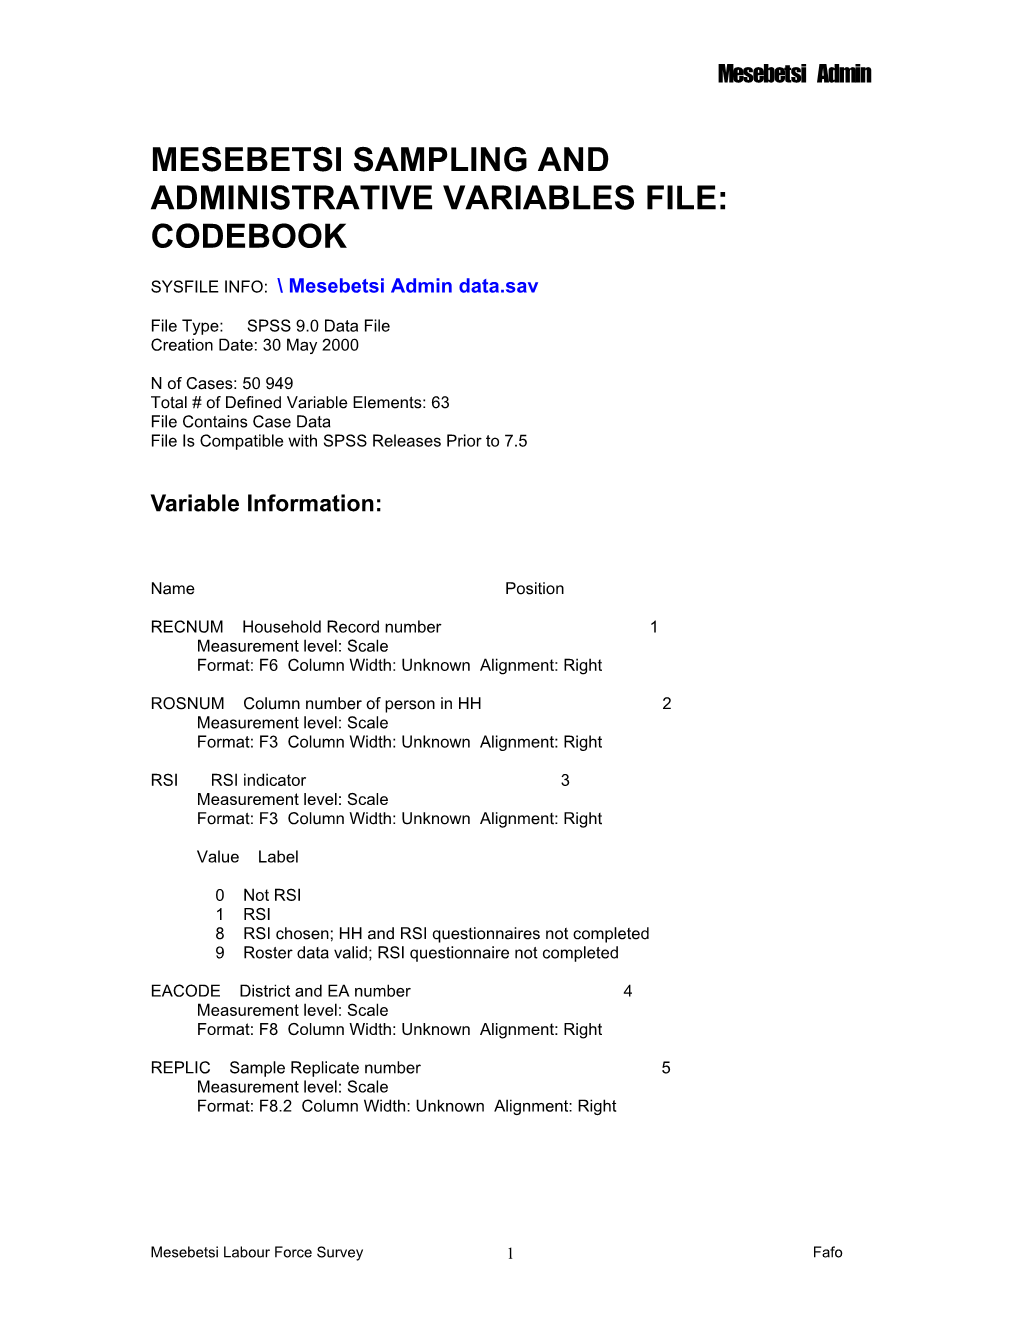 Mesebetsi Sampling and Administrative Variables File: Codebook